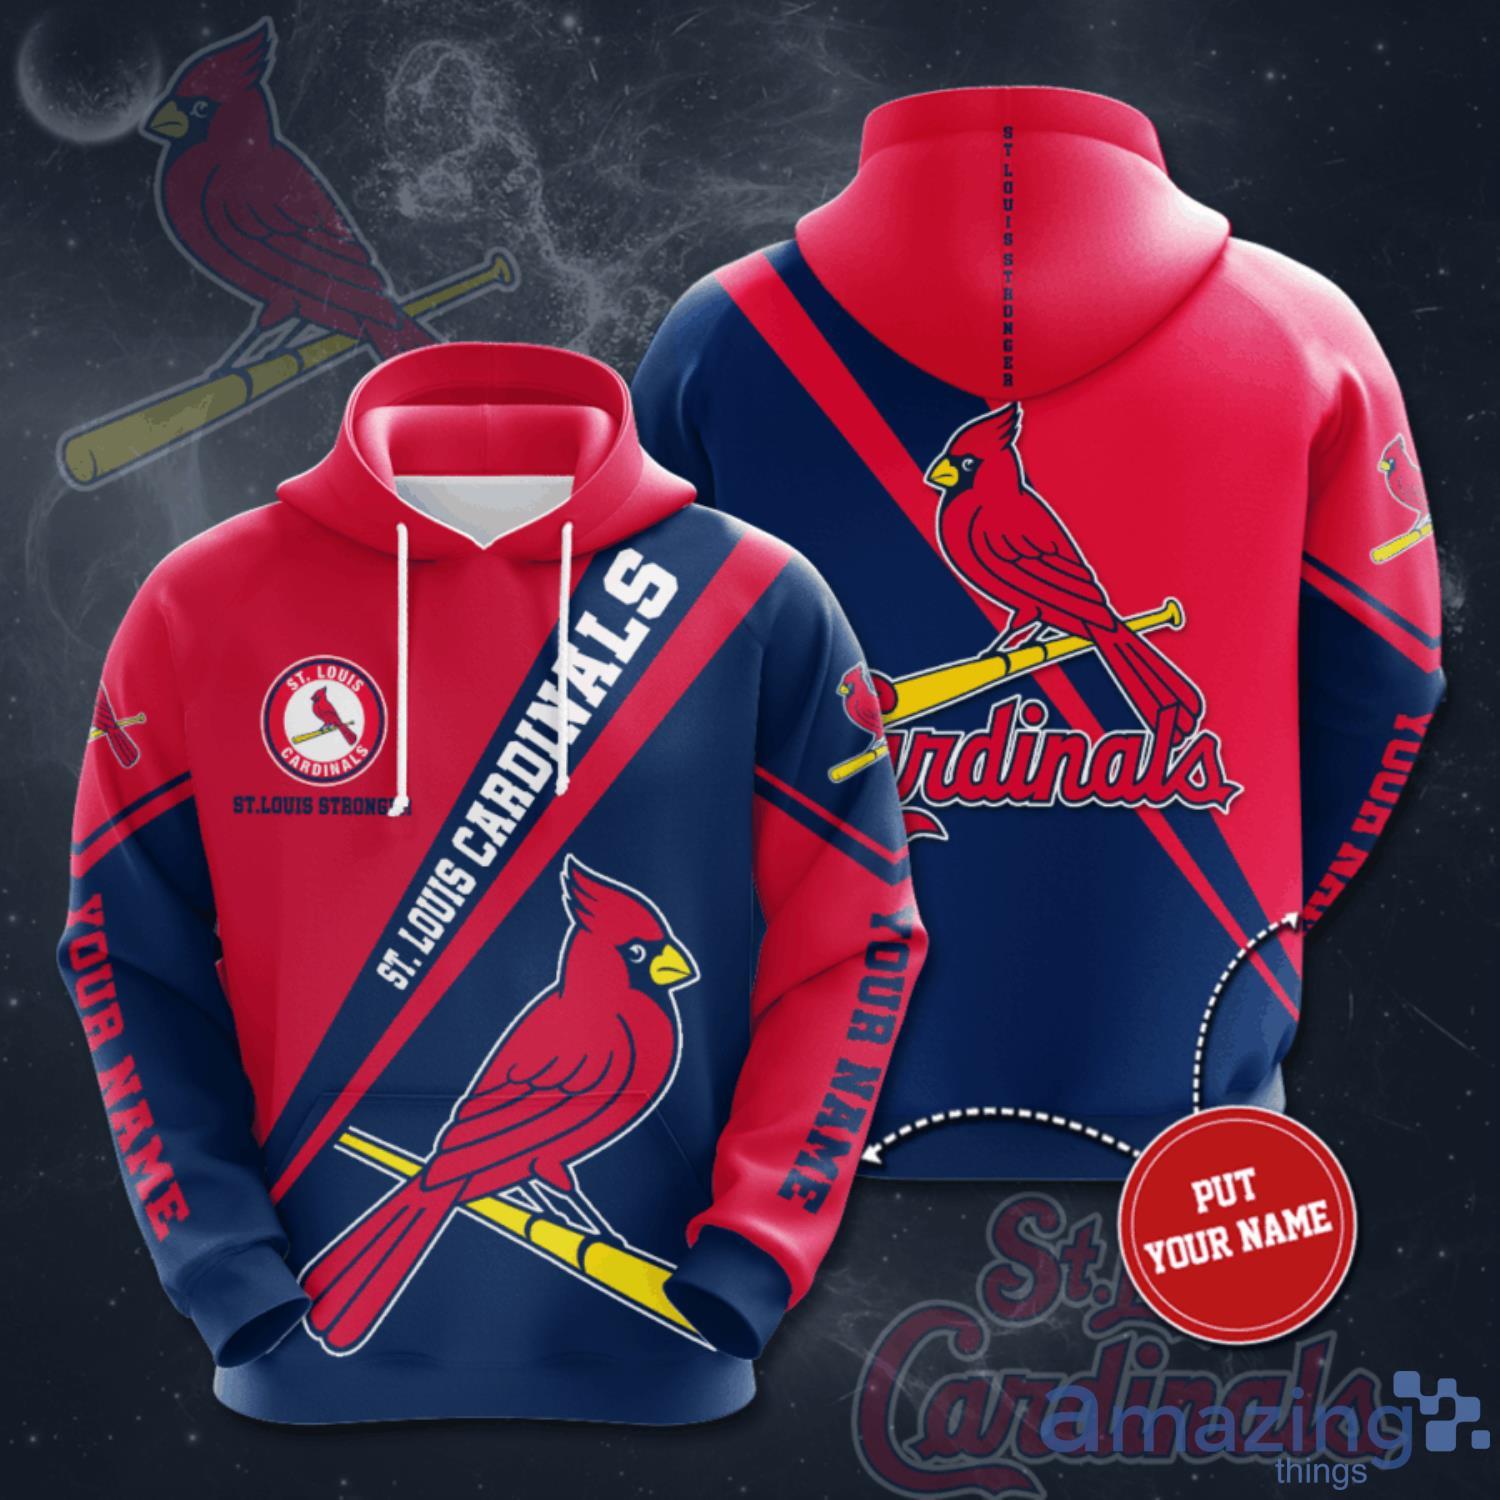 Custom St. Louis Cardinals Jerseys, Customized Cardinals Shirts, Hoodies,  Merchandise